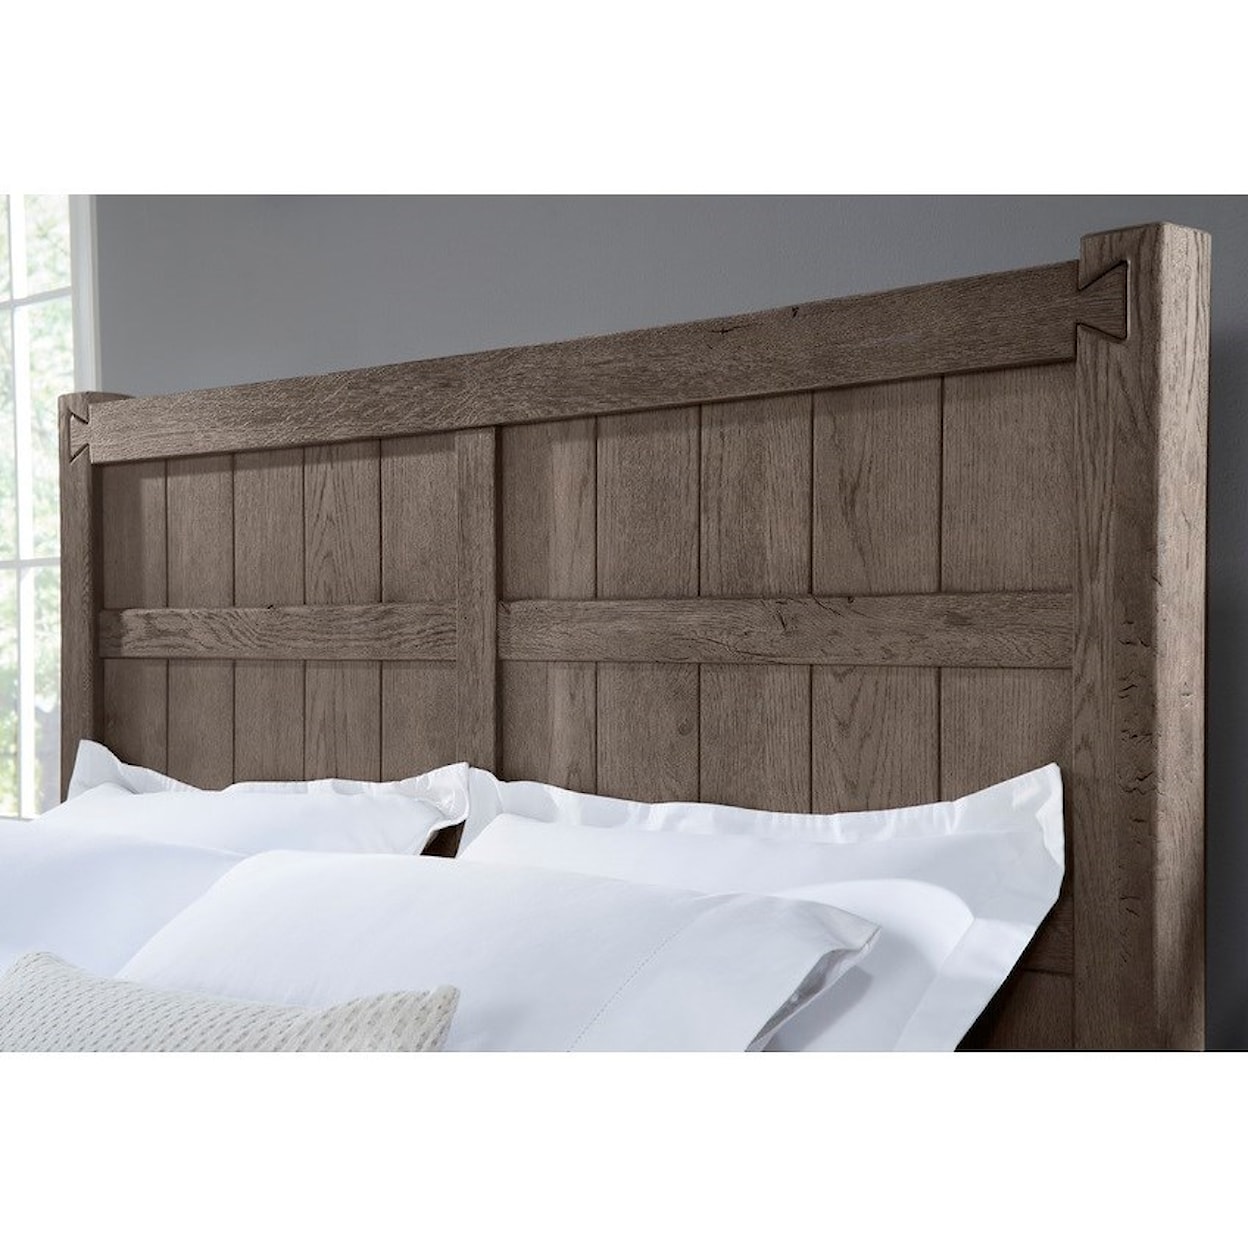 Vaughan Bassett Dovetail Bedroom King Board and Batten Bed